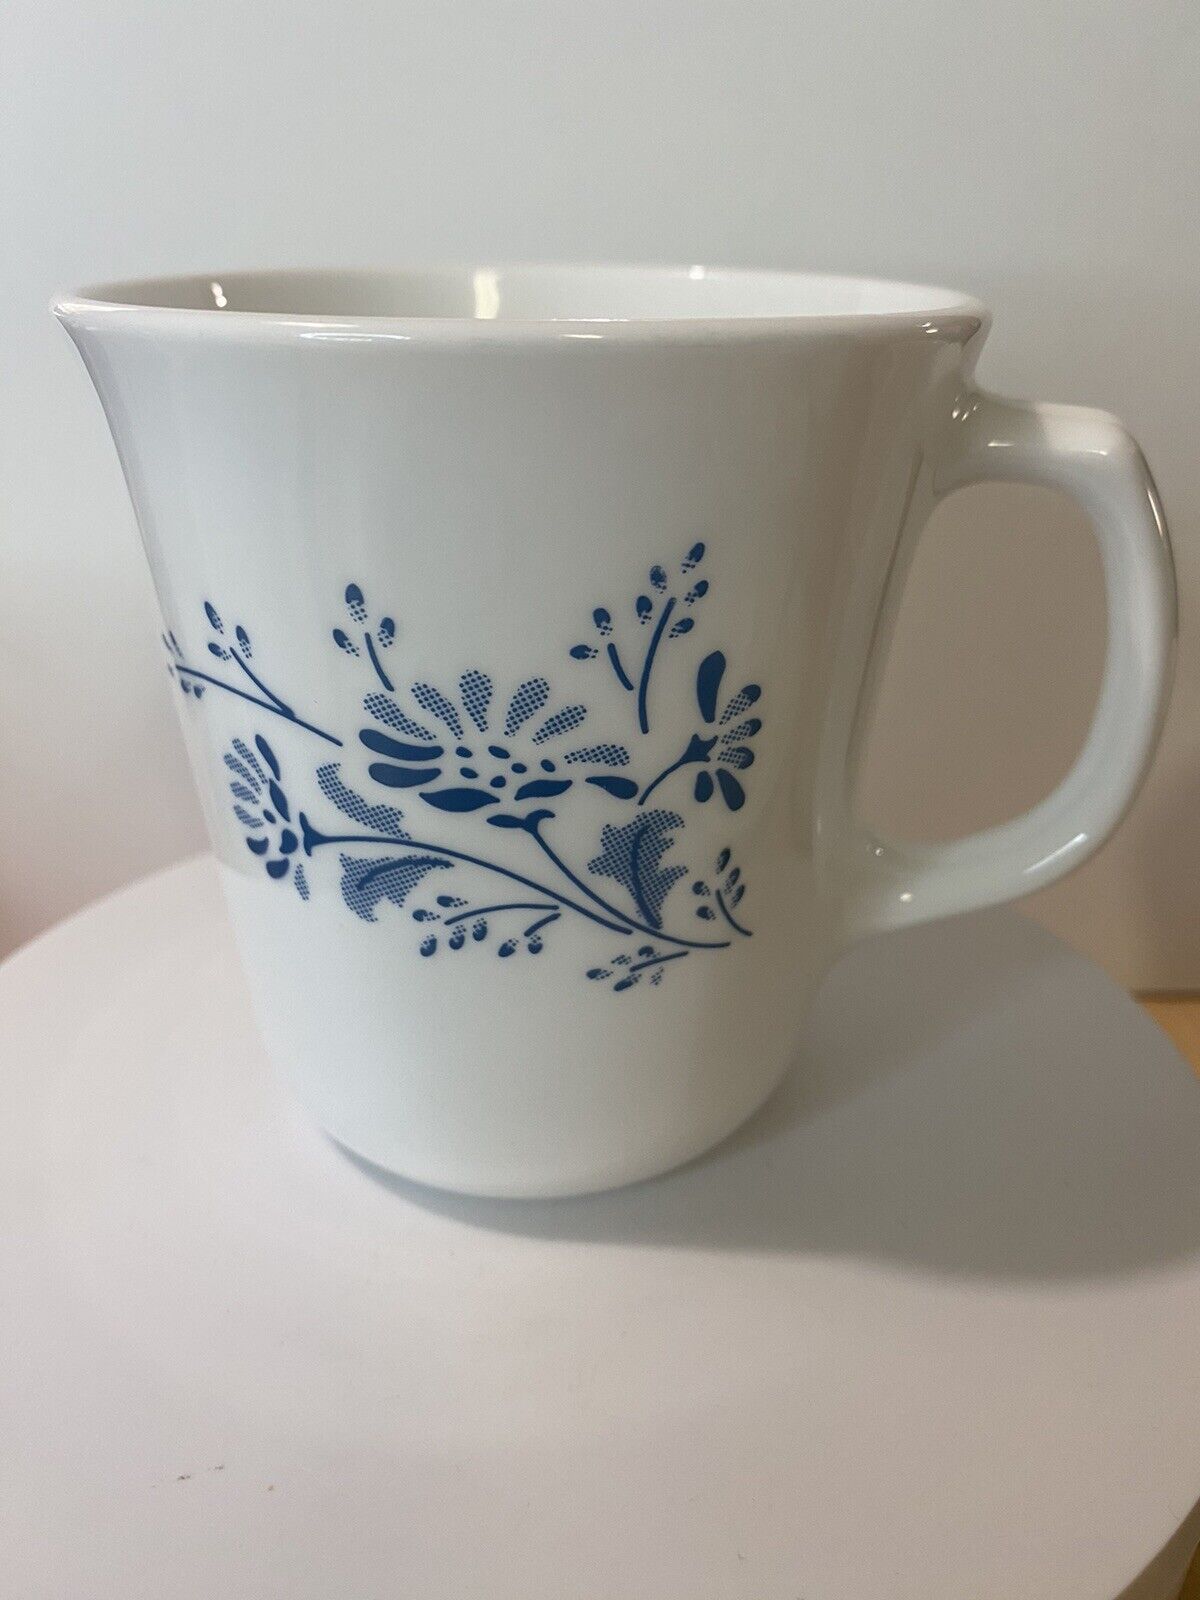 1-CORELLE CORNING COLONIAL MIST Milk Glass Coffee Mug Tea Cup Blue White Floral